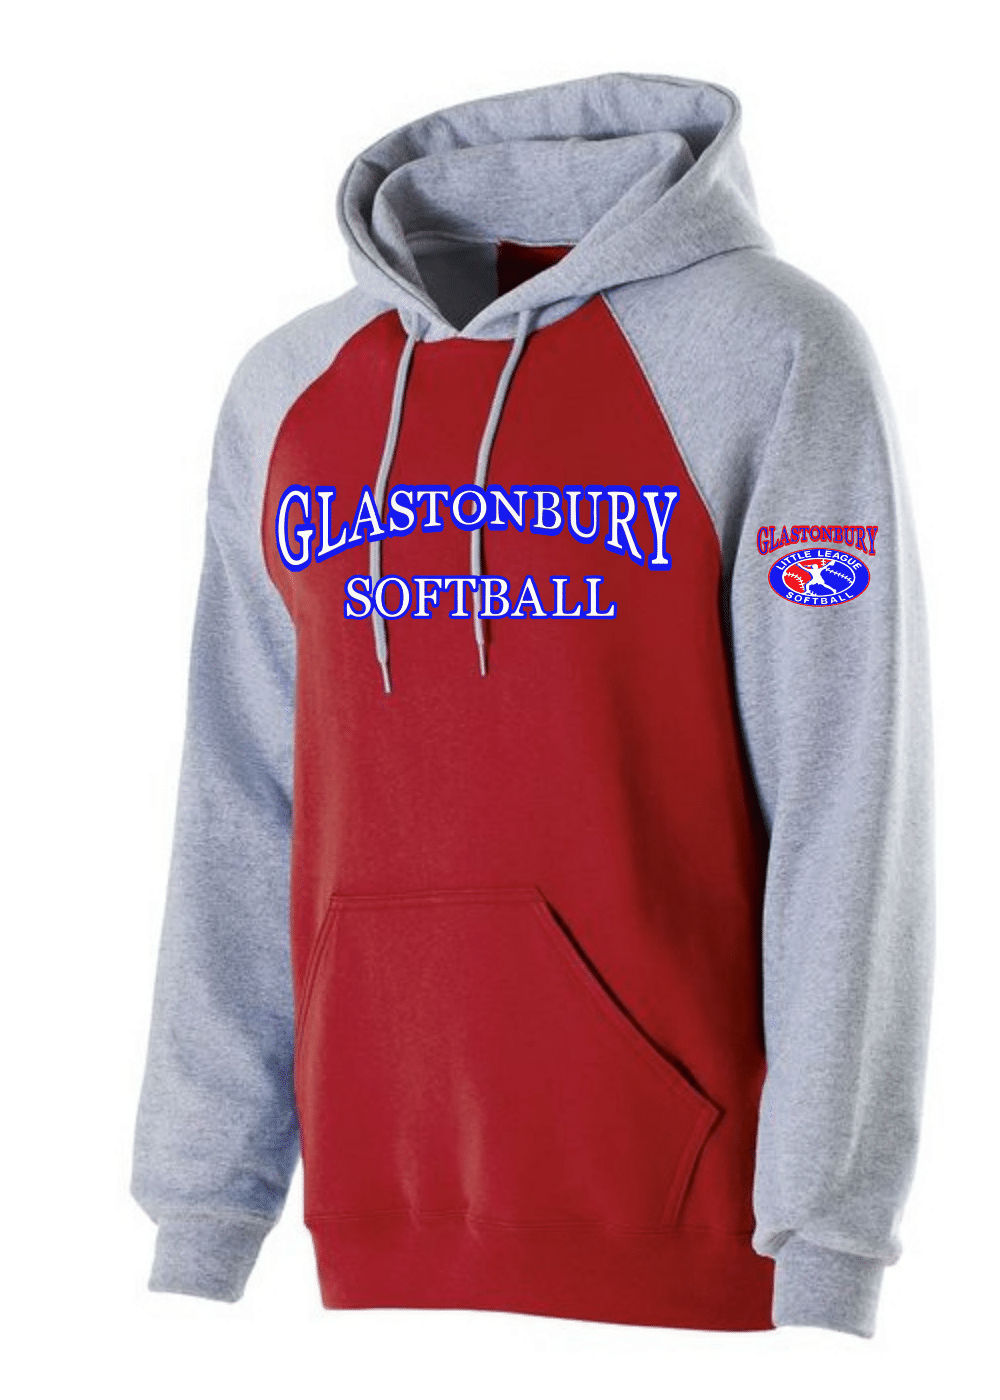 Glastonbury Little League Softball Hooded Sweatshirt